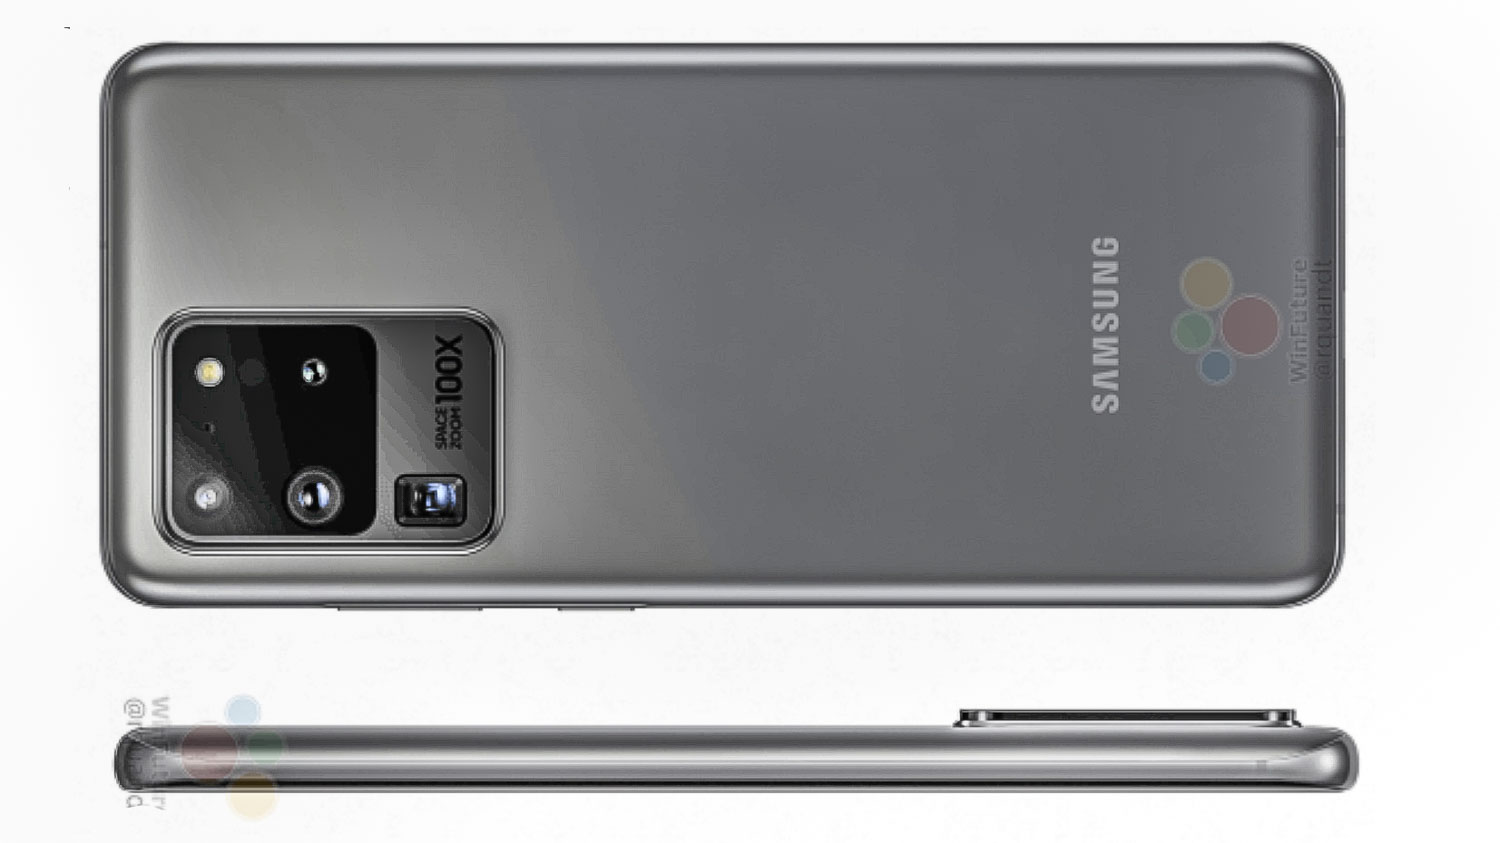 Samsung S20 Авито